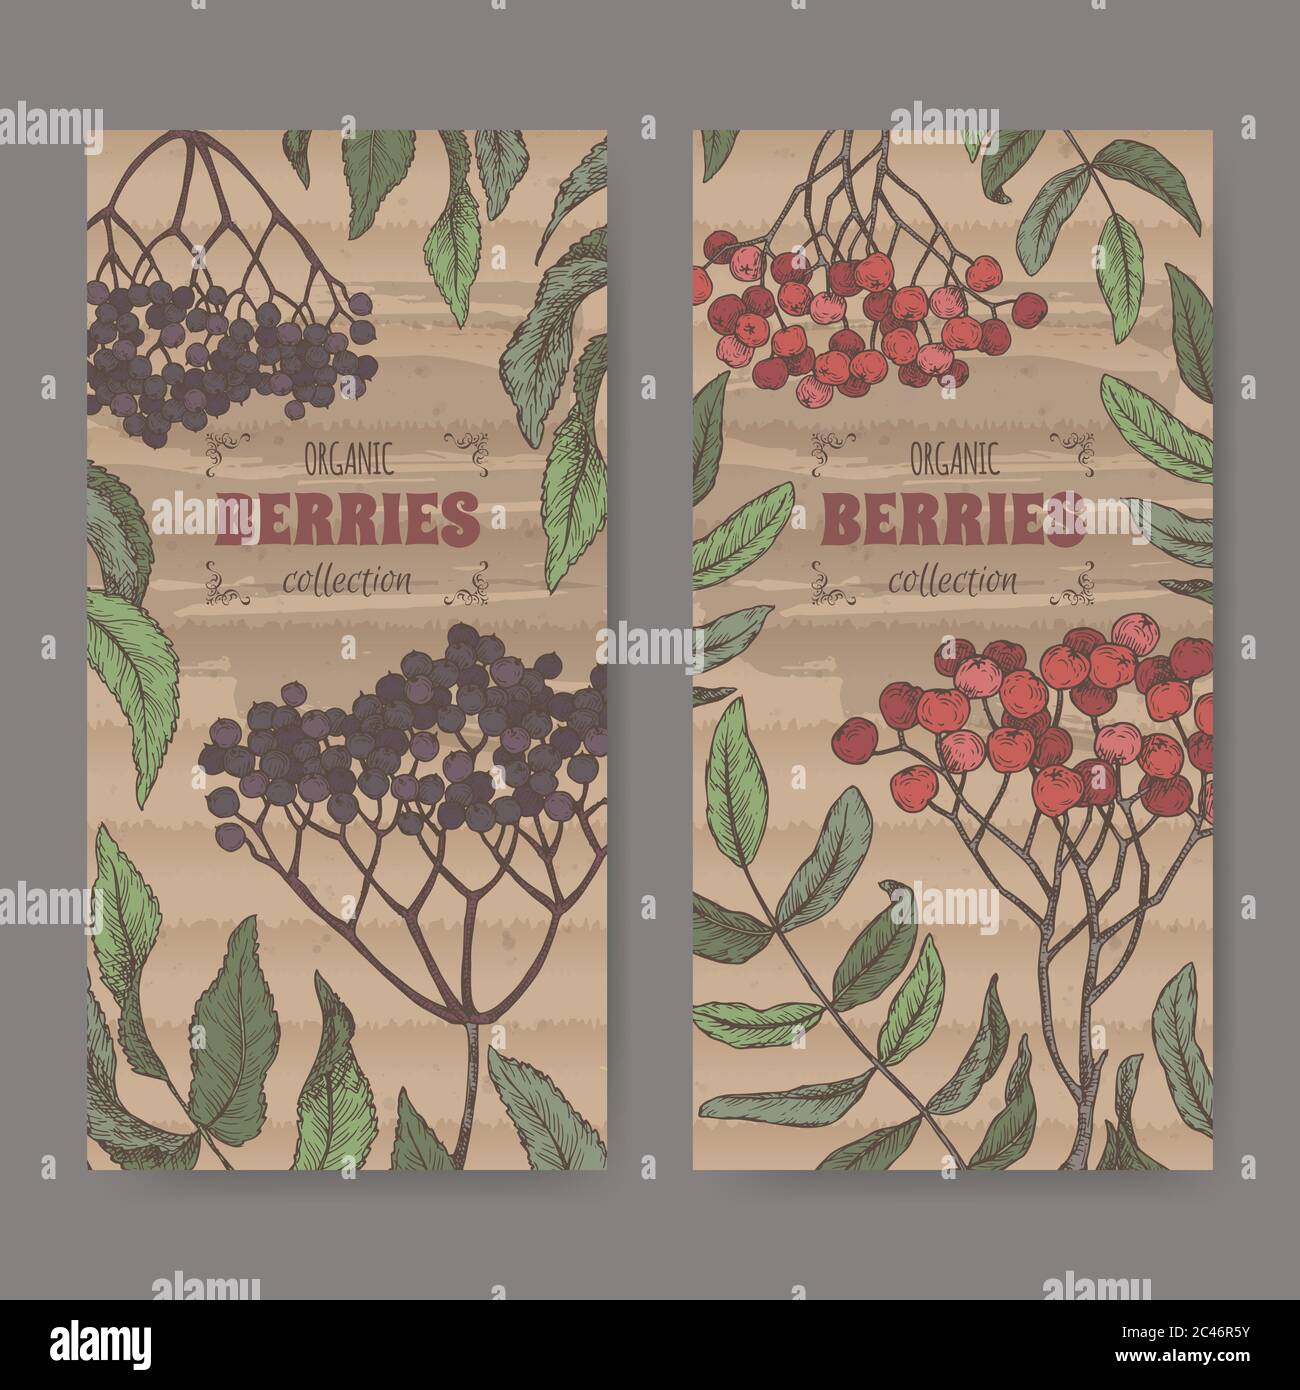 Set aus zwei Farbetiketten mit Sambucus aka Holunderbeere und Rowan aka Sorbus aucuparia Zweig Skizze. Berry Fruits Serie. Stock Vektor